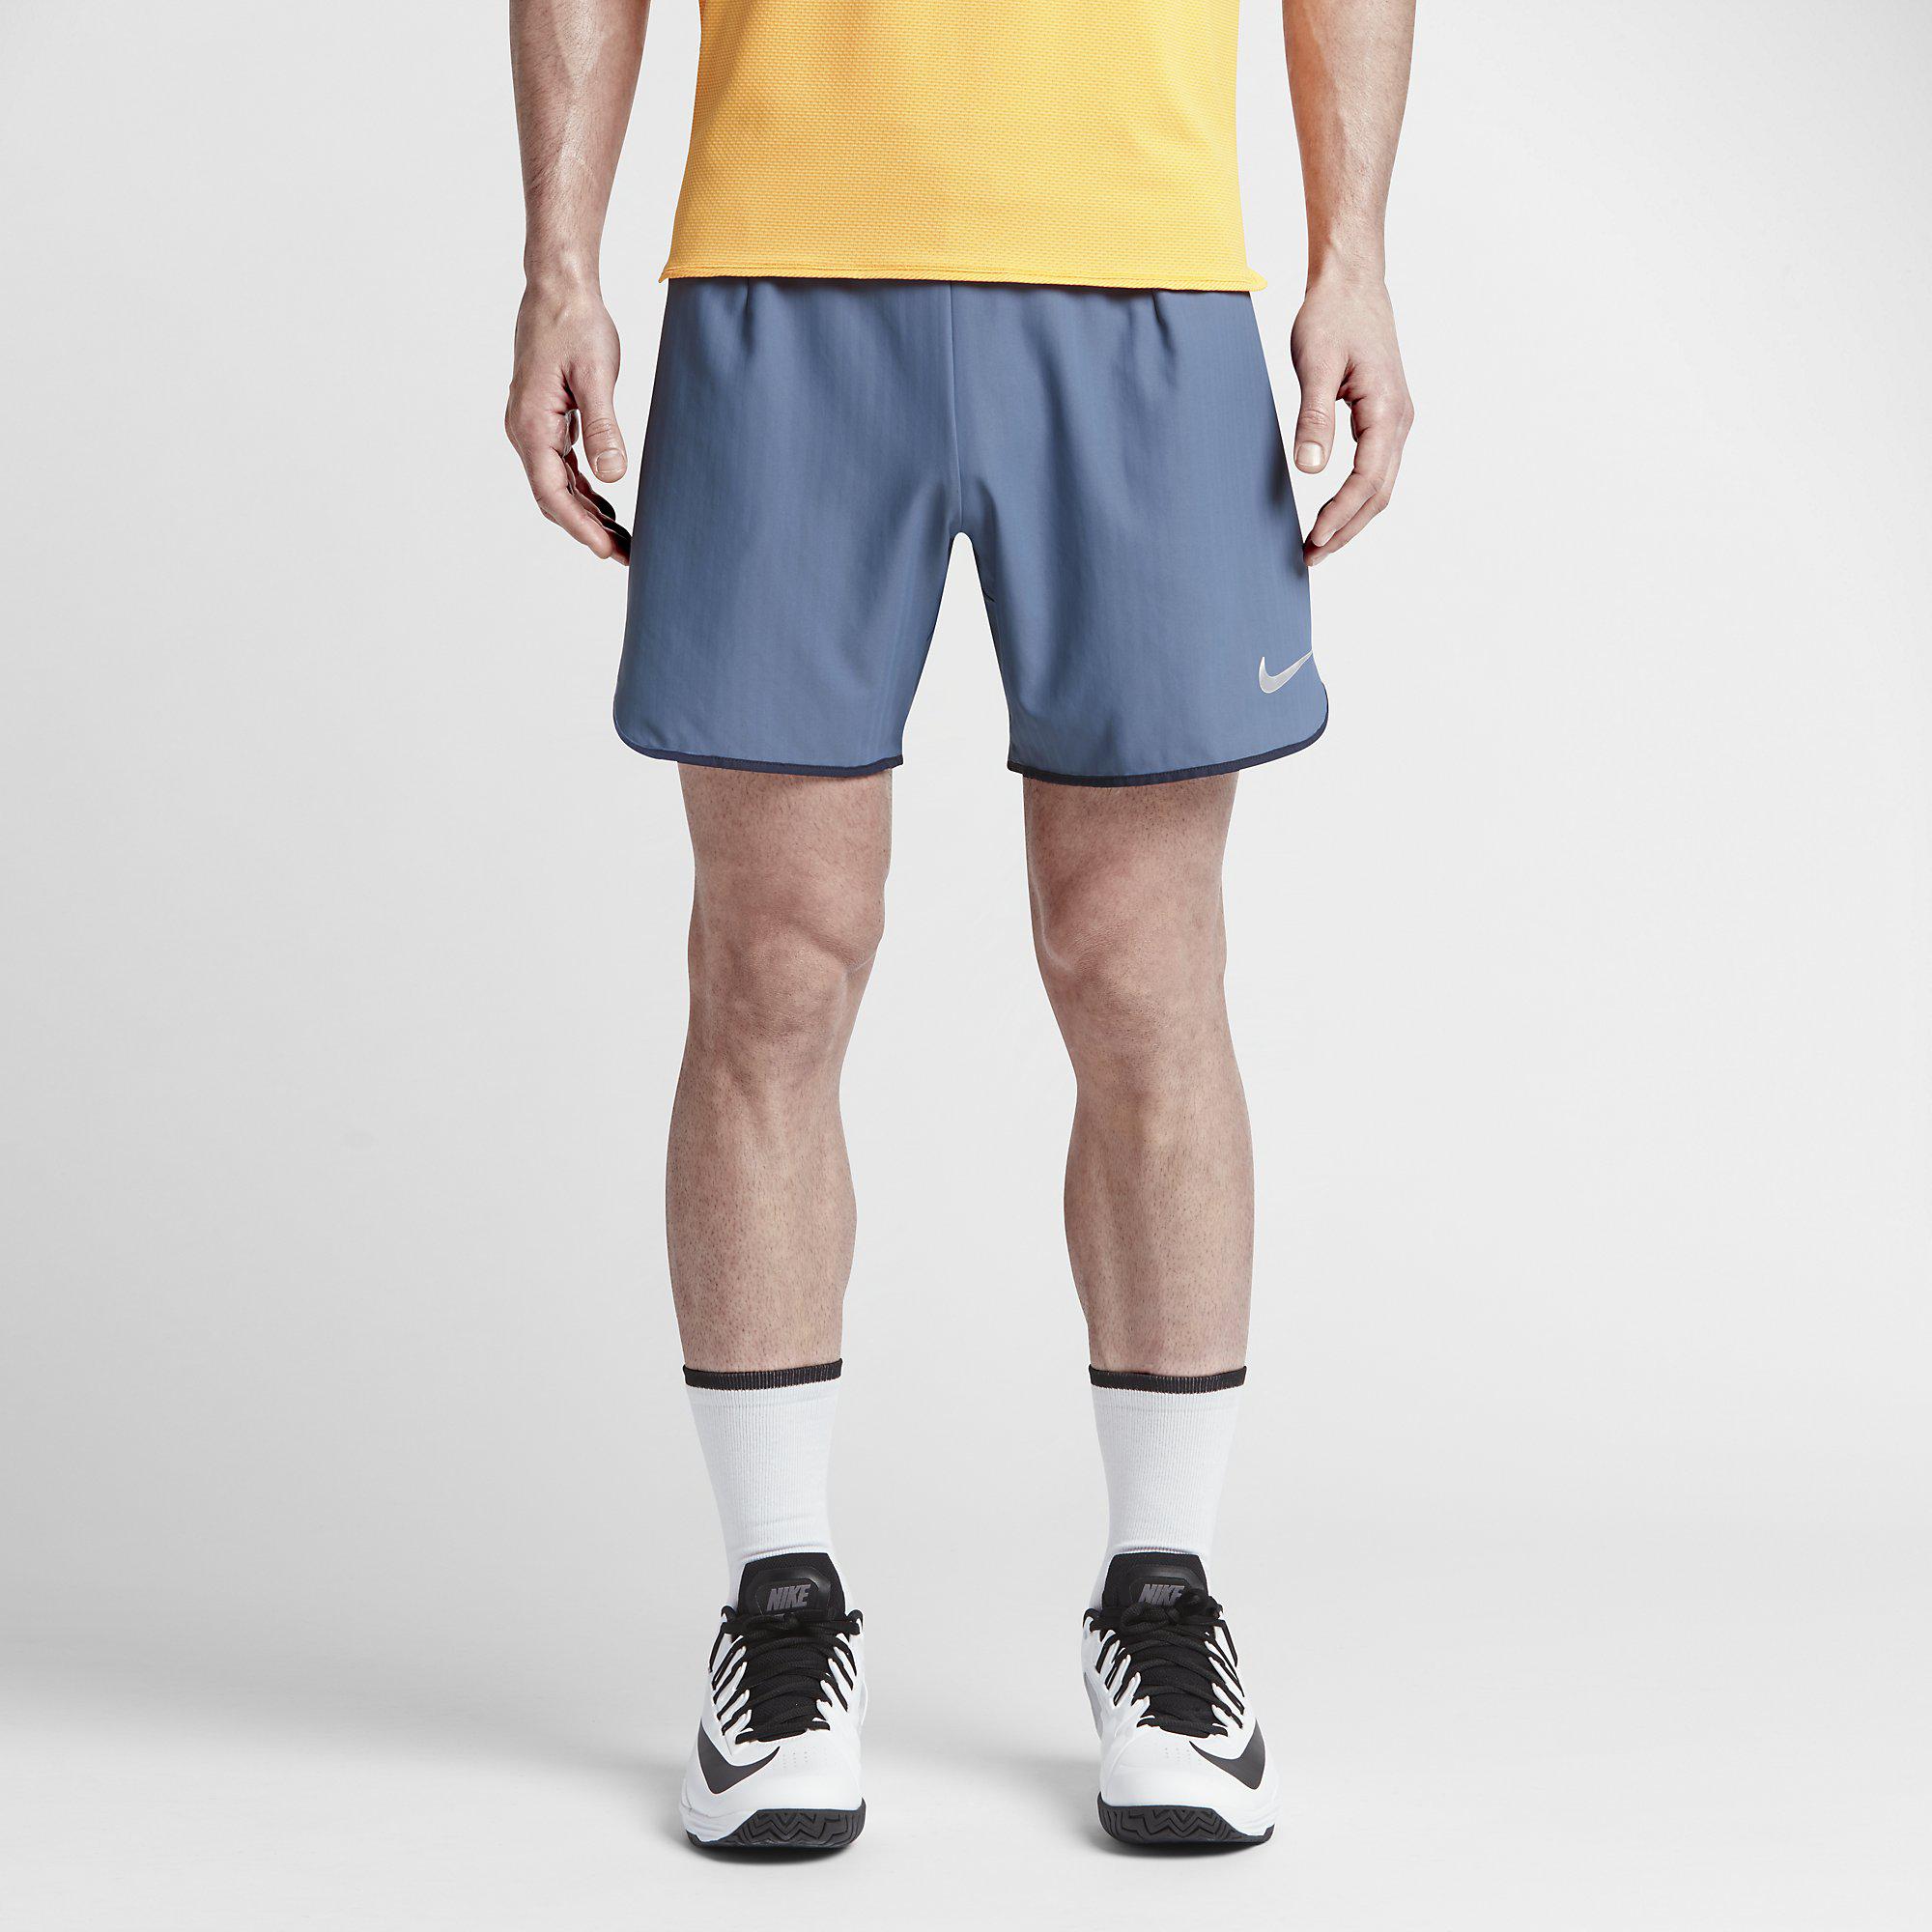 Nike Mens Premier Gladiator 7 Inch Shorts - Ocean Fog Blue - Tennisnuts.com